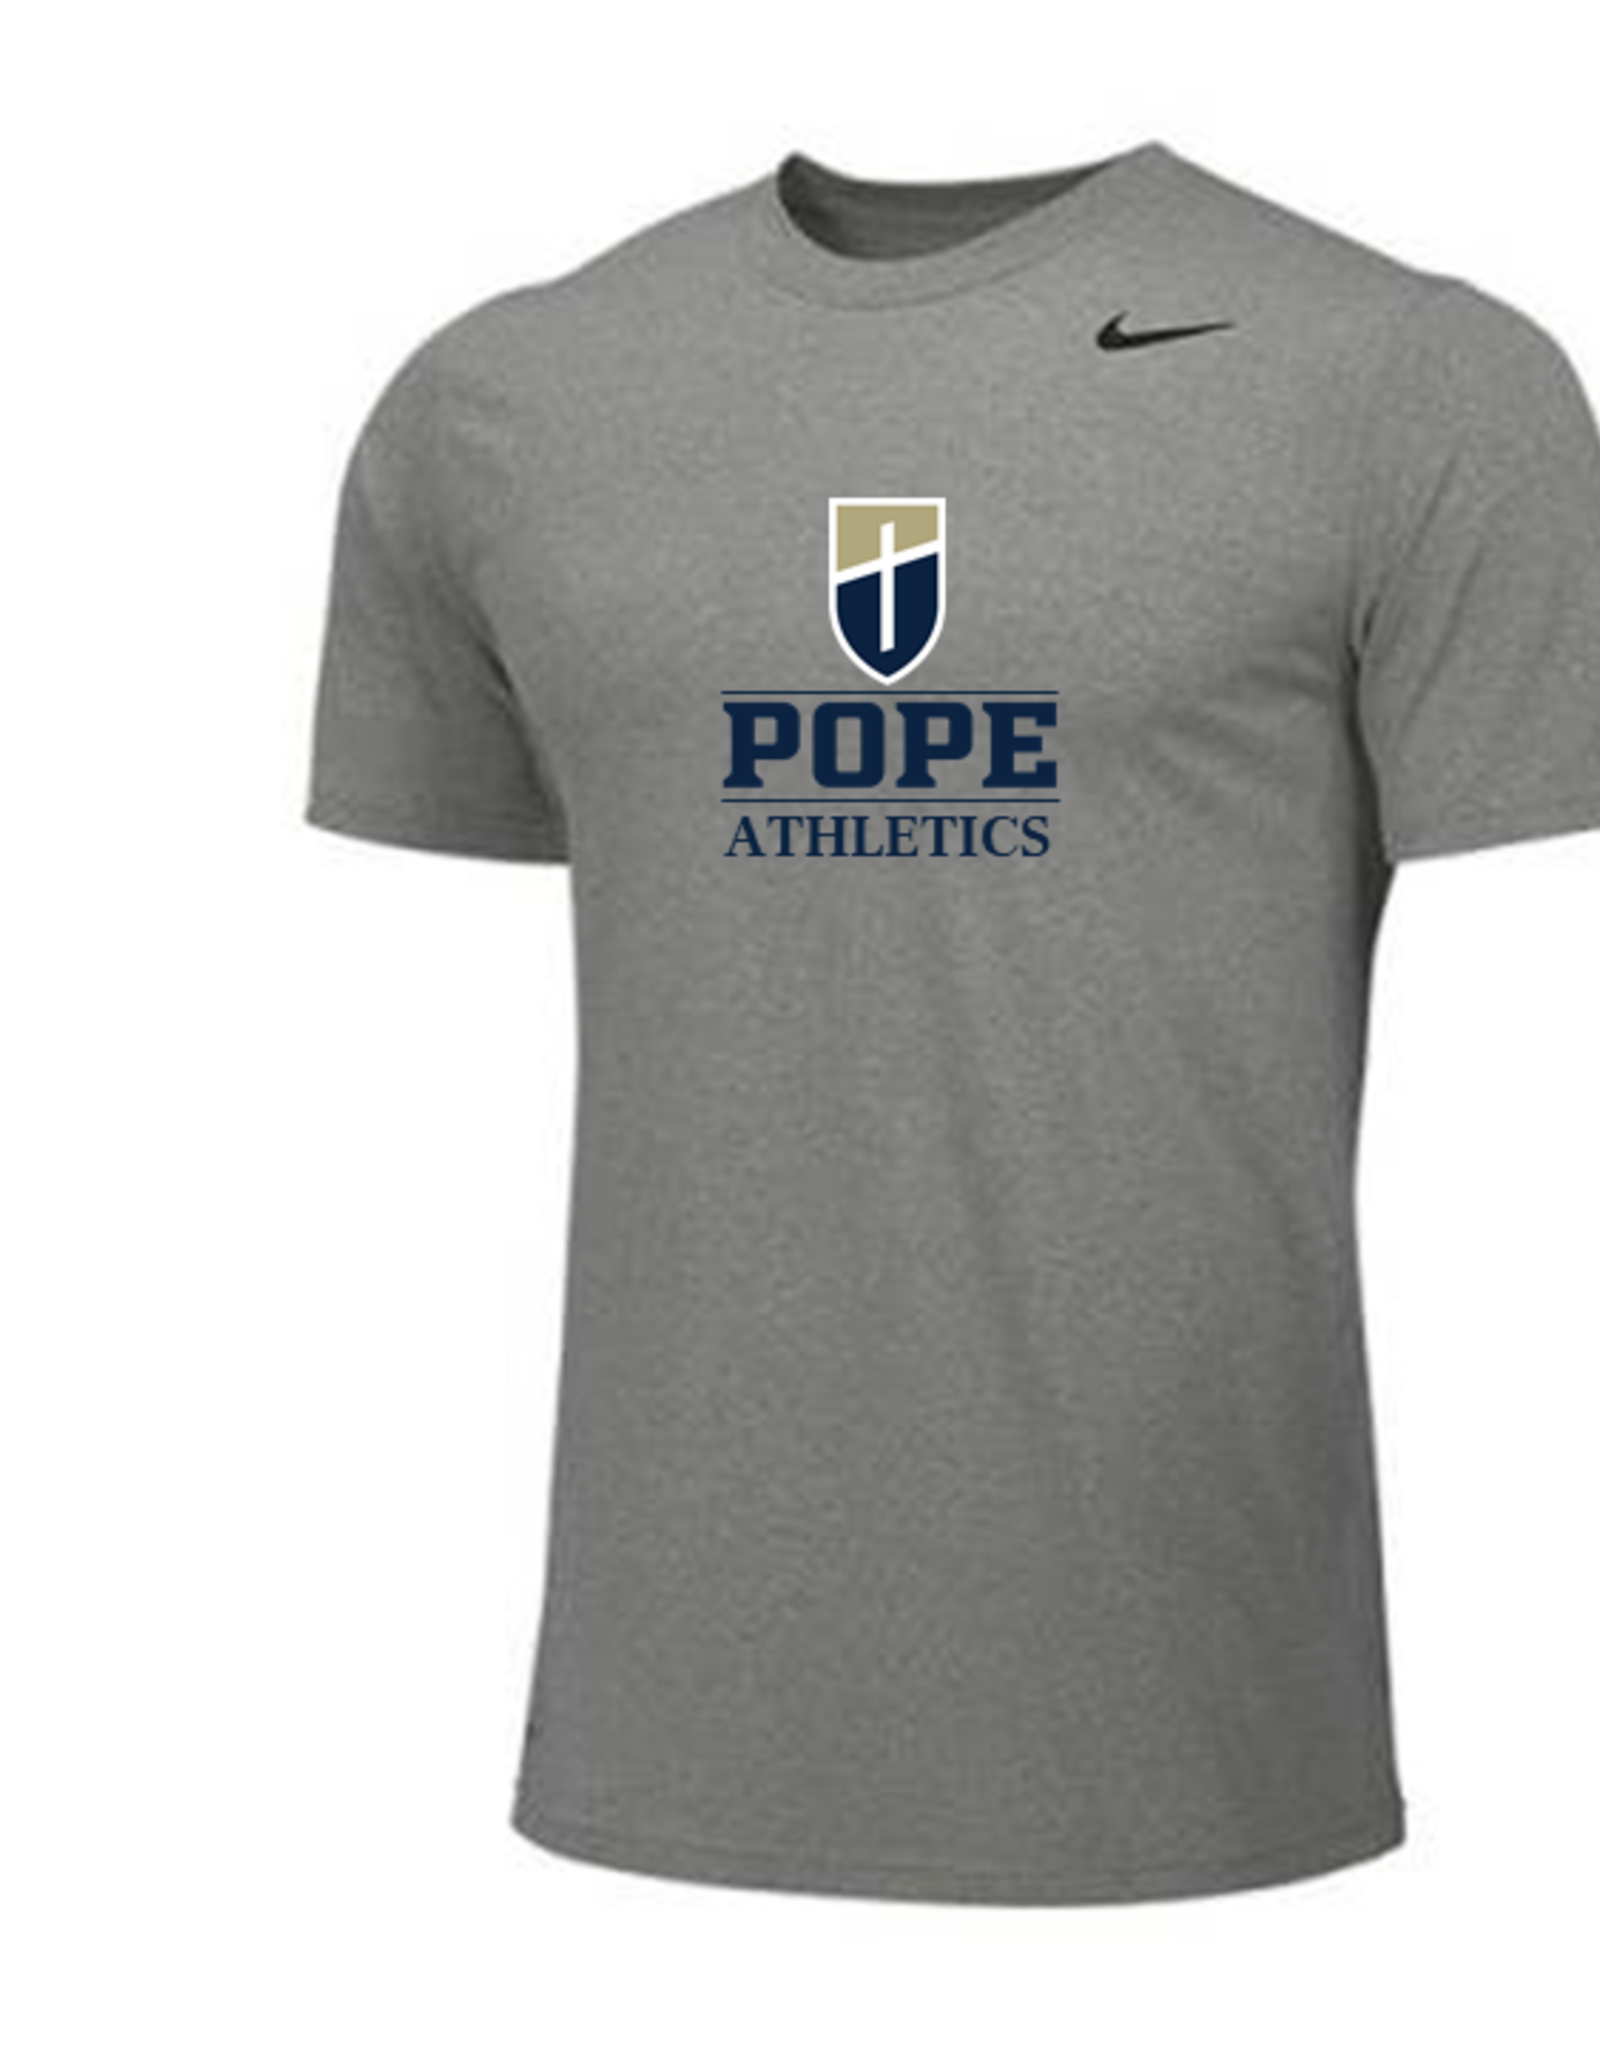 Nike Dri-Fit Short-Sleeve Gray Pope Athletics